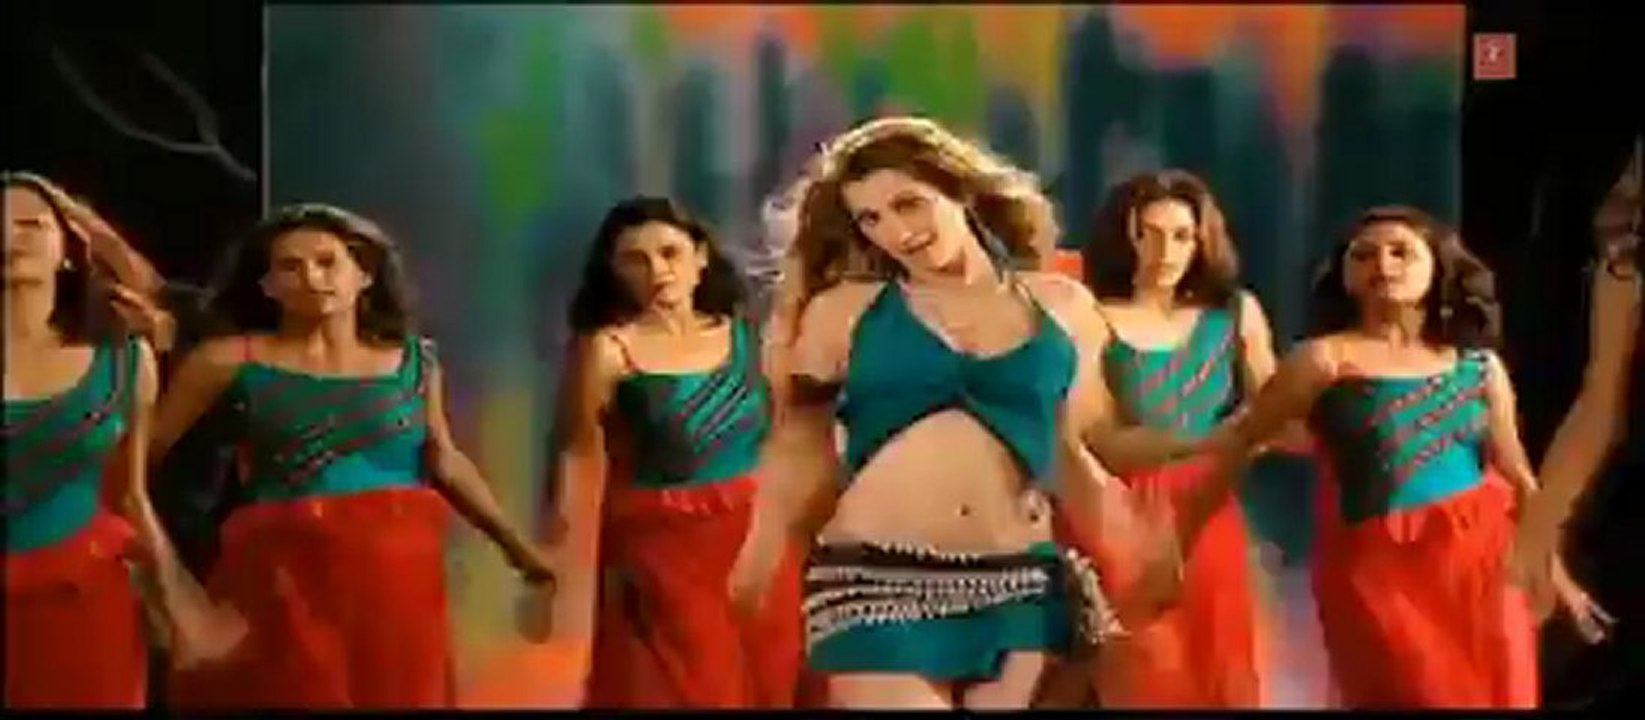 Aap Jaisa Koi Meri Zindagi Mein Aaye - Sweet Honey Mix Video Song - Ft. Hot & Sexy Negar Khan.